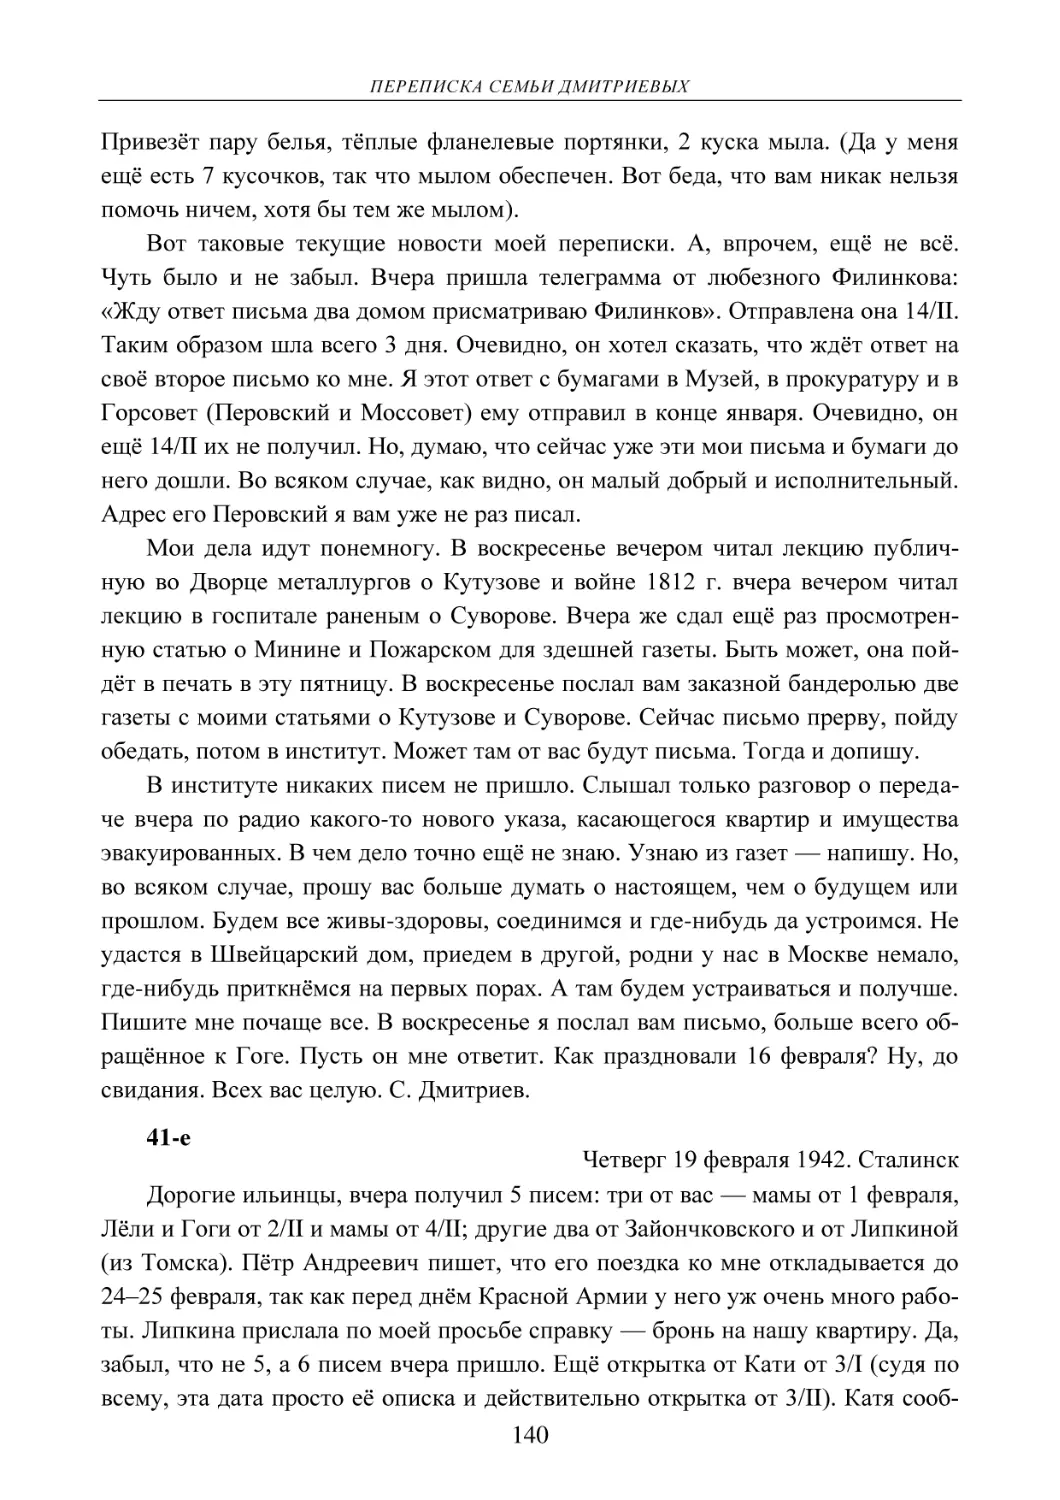 41-е
Четверг 19 февраля 1942. Сталинск